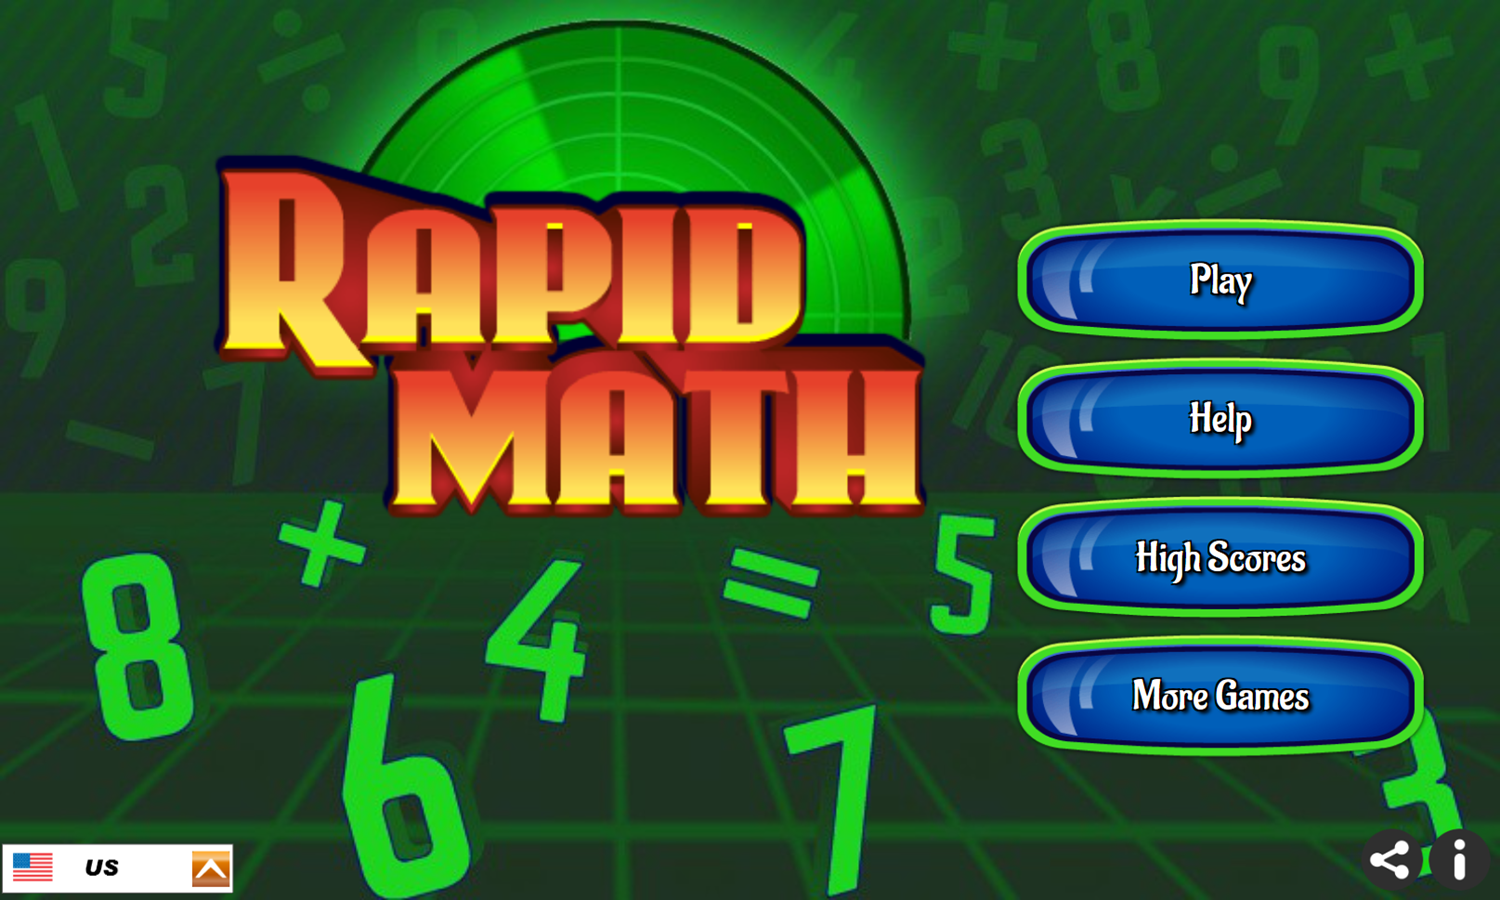 Rapid Math Game Welcome Screen Screenshot.